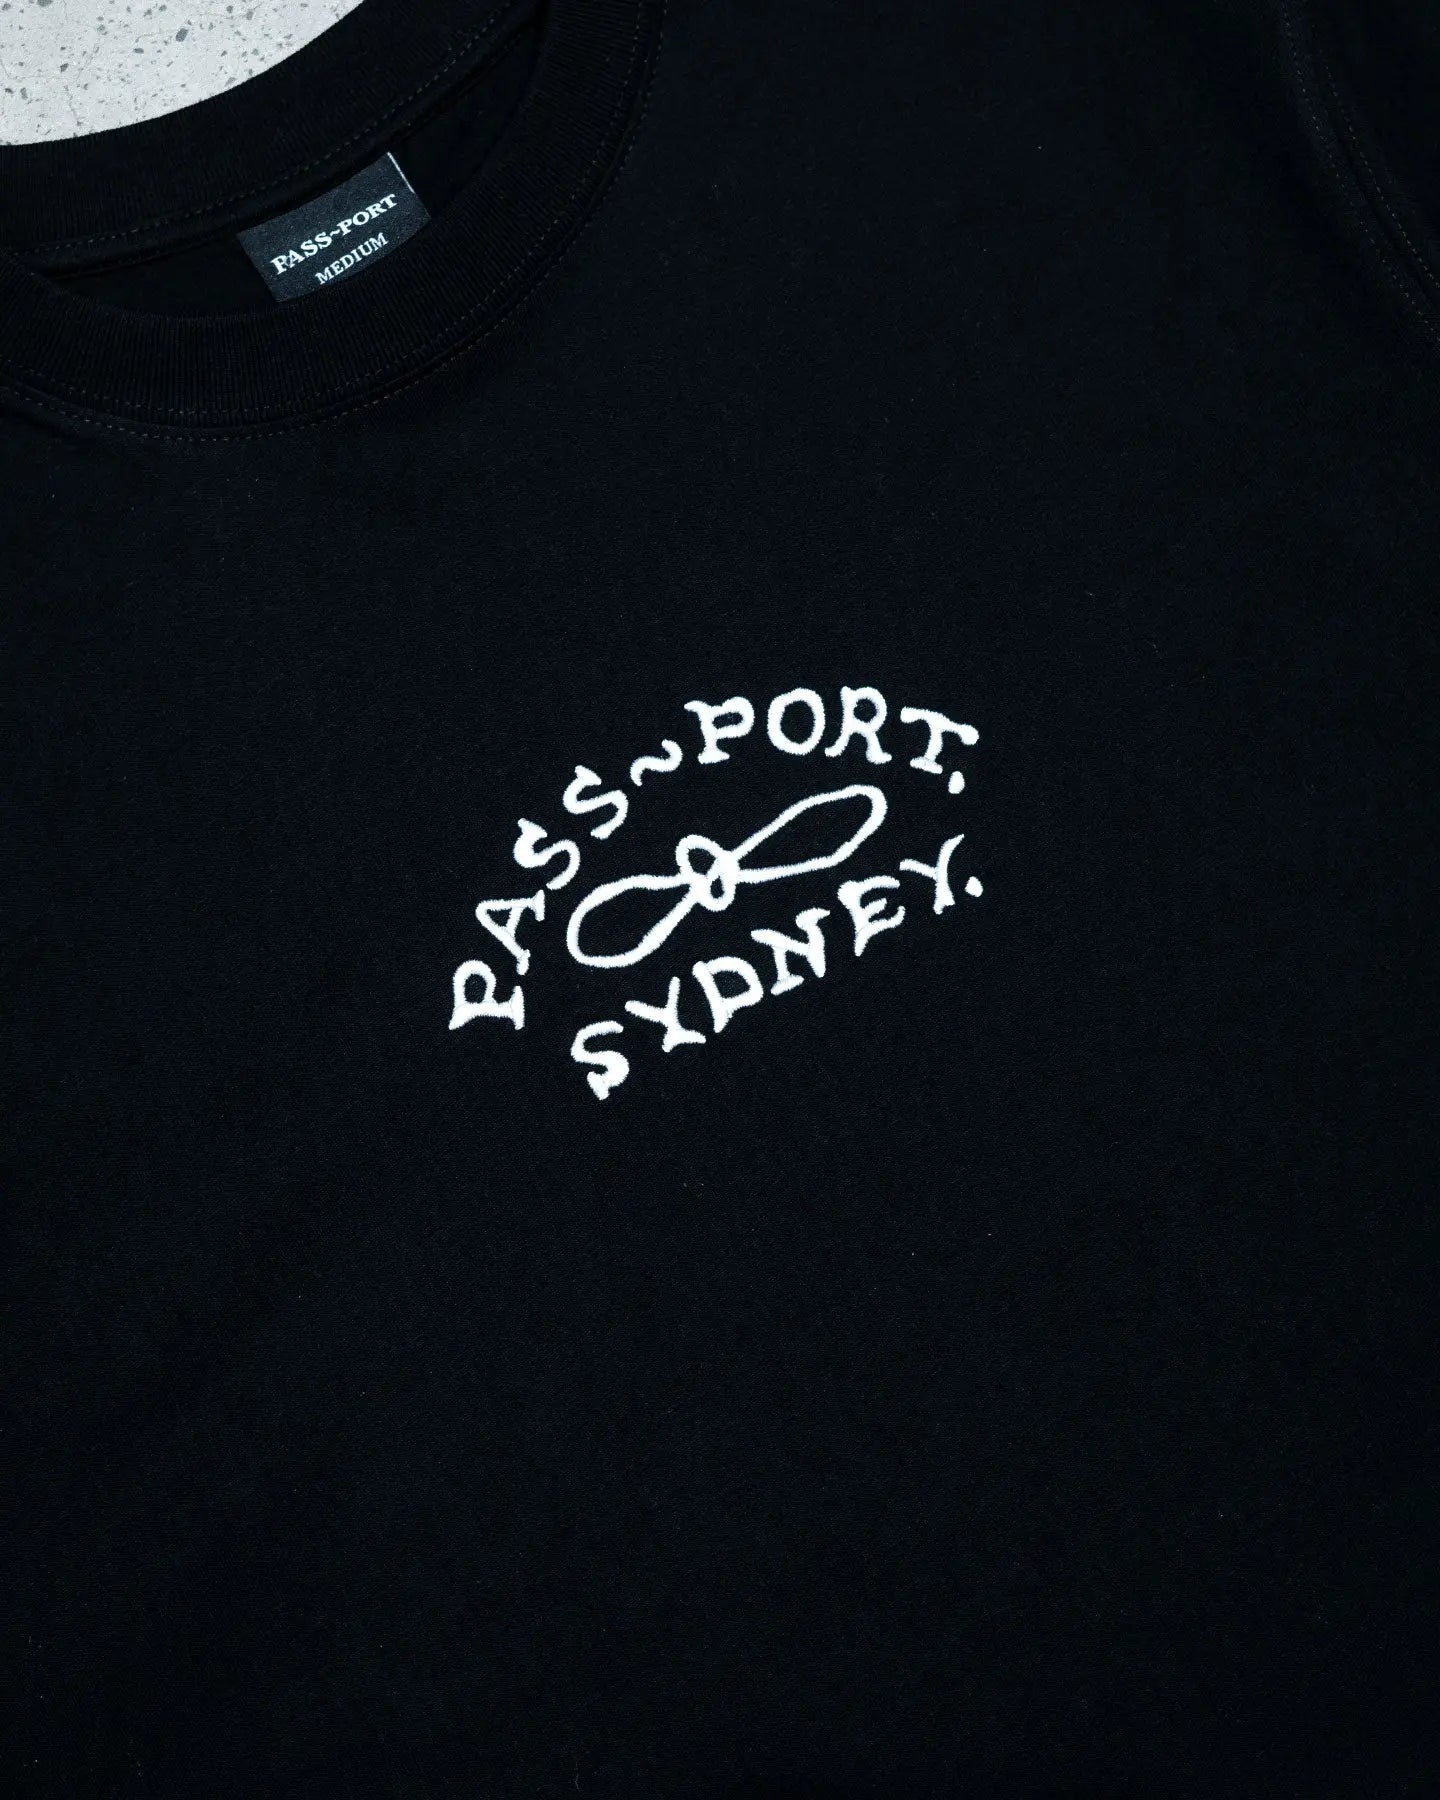 pass port moniker embroidered organic tee black